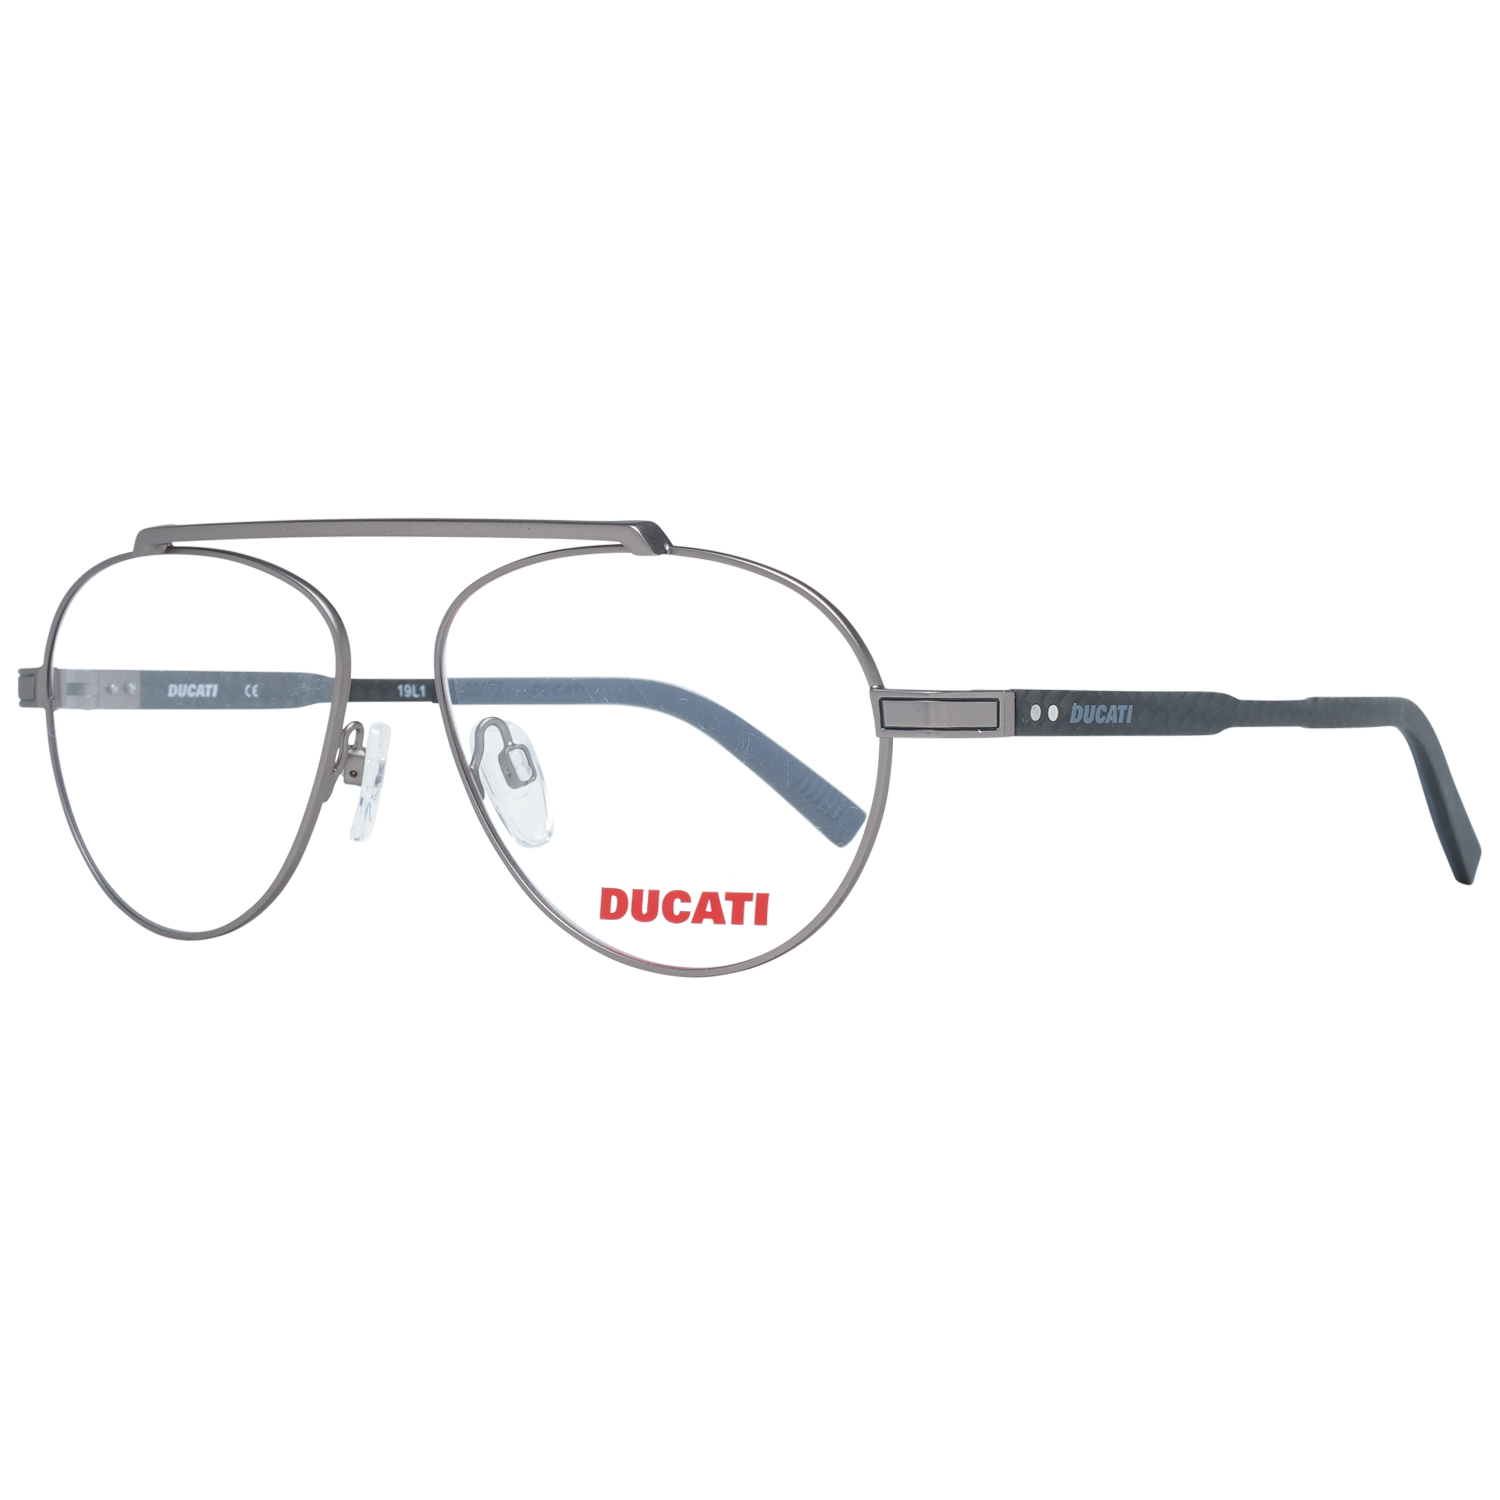 Ducati Frames Ducati Optical Frame DA3029 968 57 Eyeglasses Eyewear UK USA Australia 